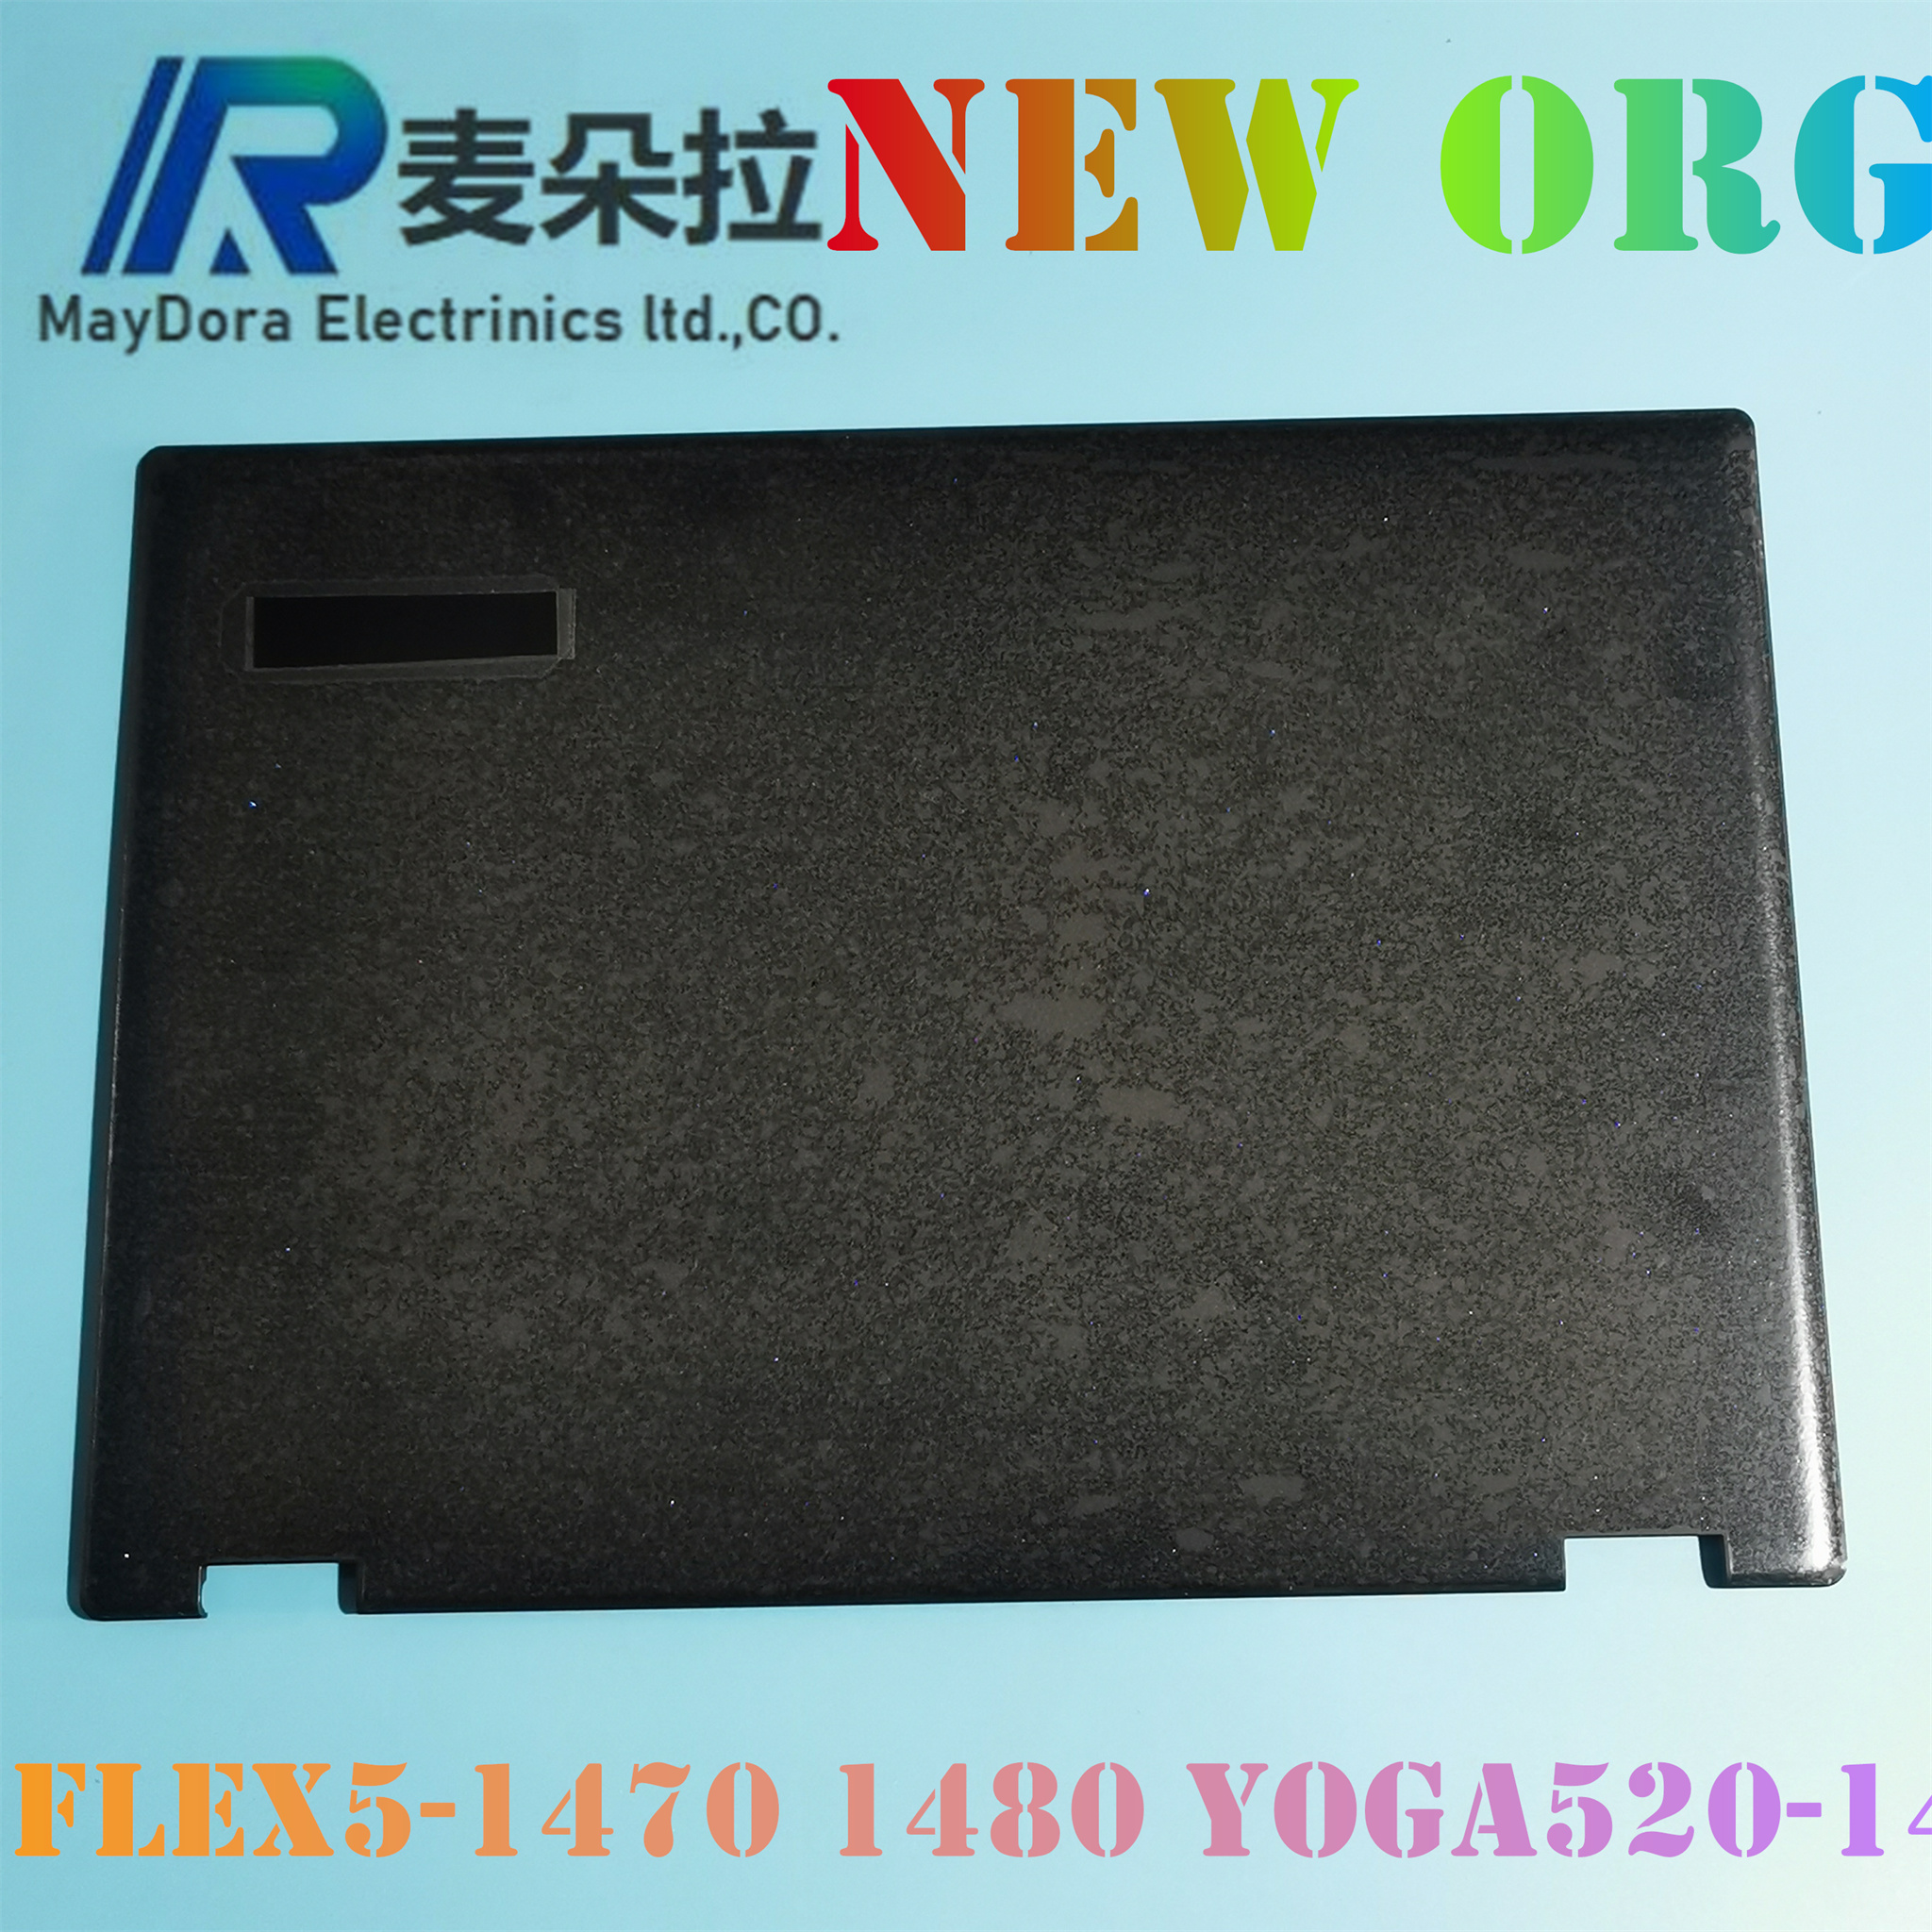 New org laptop case for FLEX5-1470 1480 1435 YOGA520-14 IKB heb LCD back coverbottom base US KB palmrest ap1ym000830